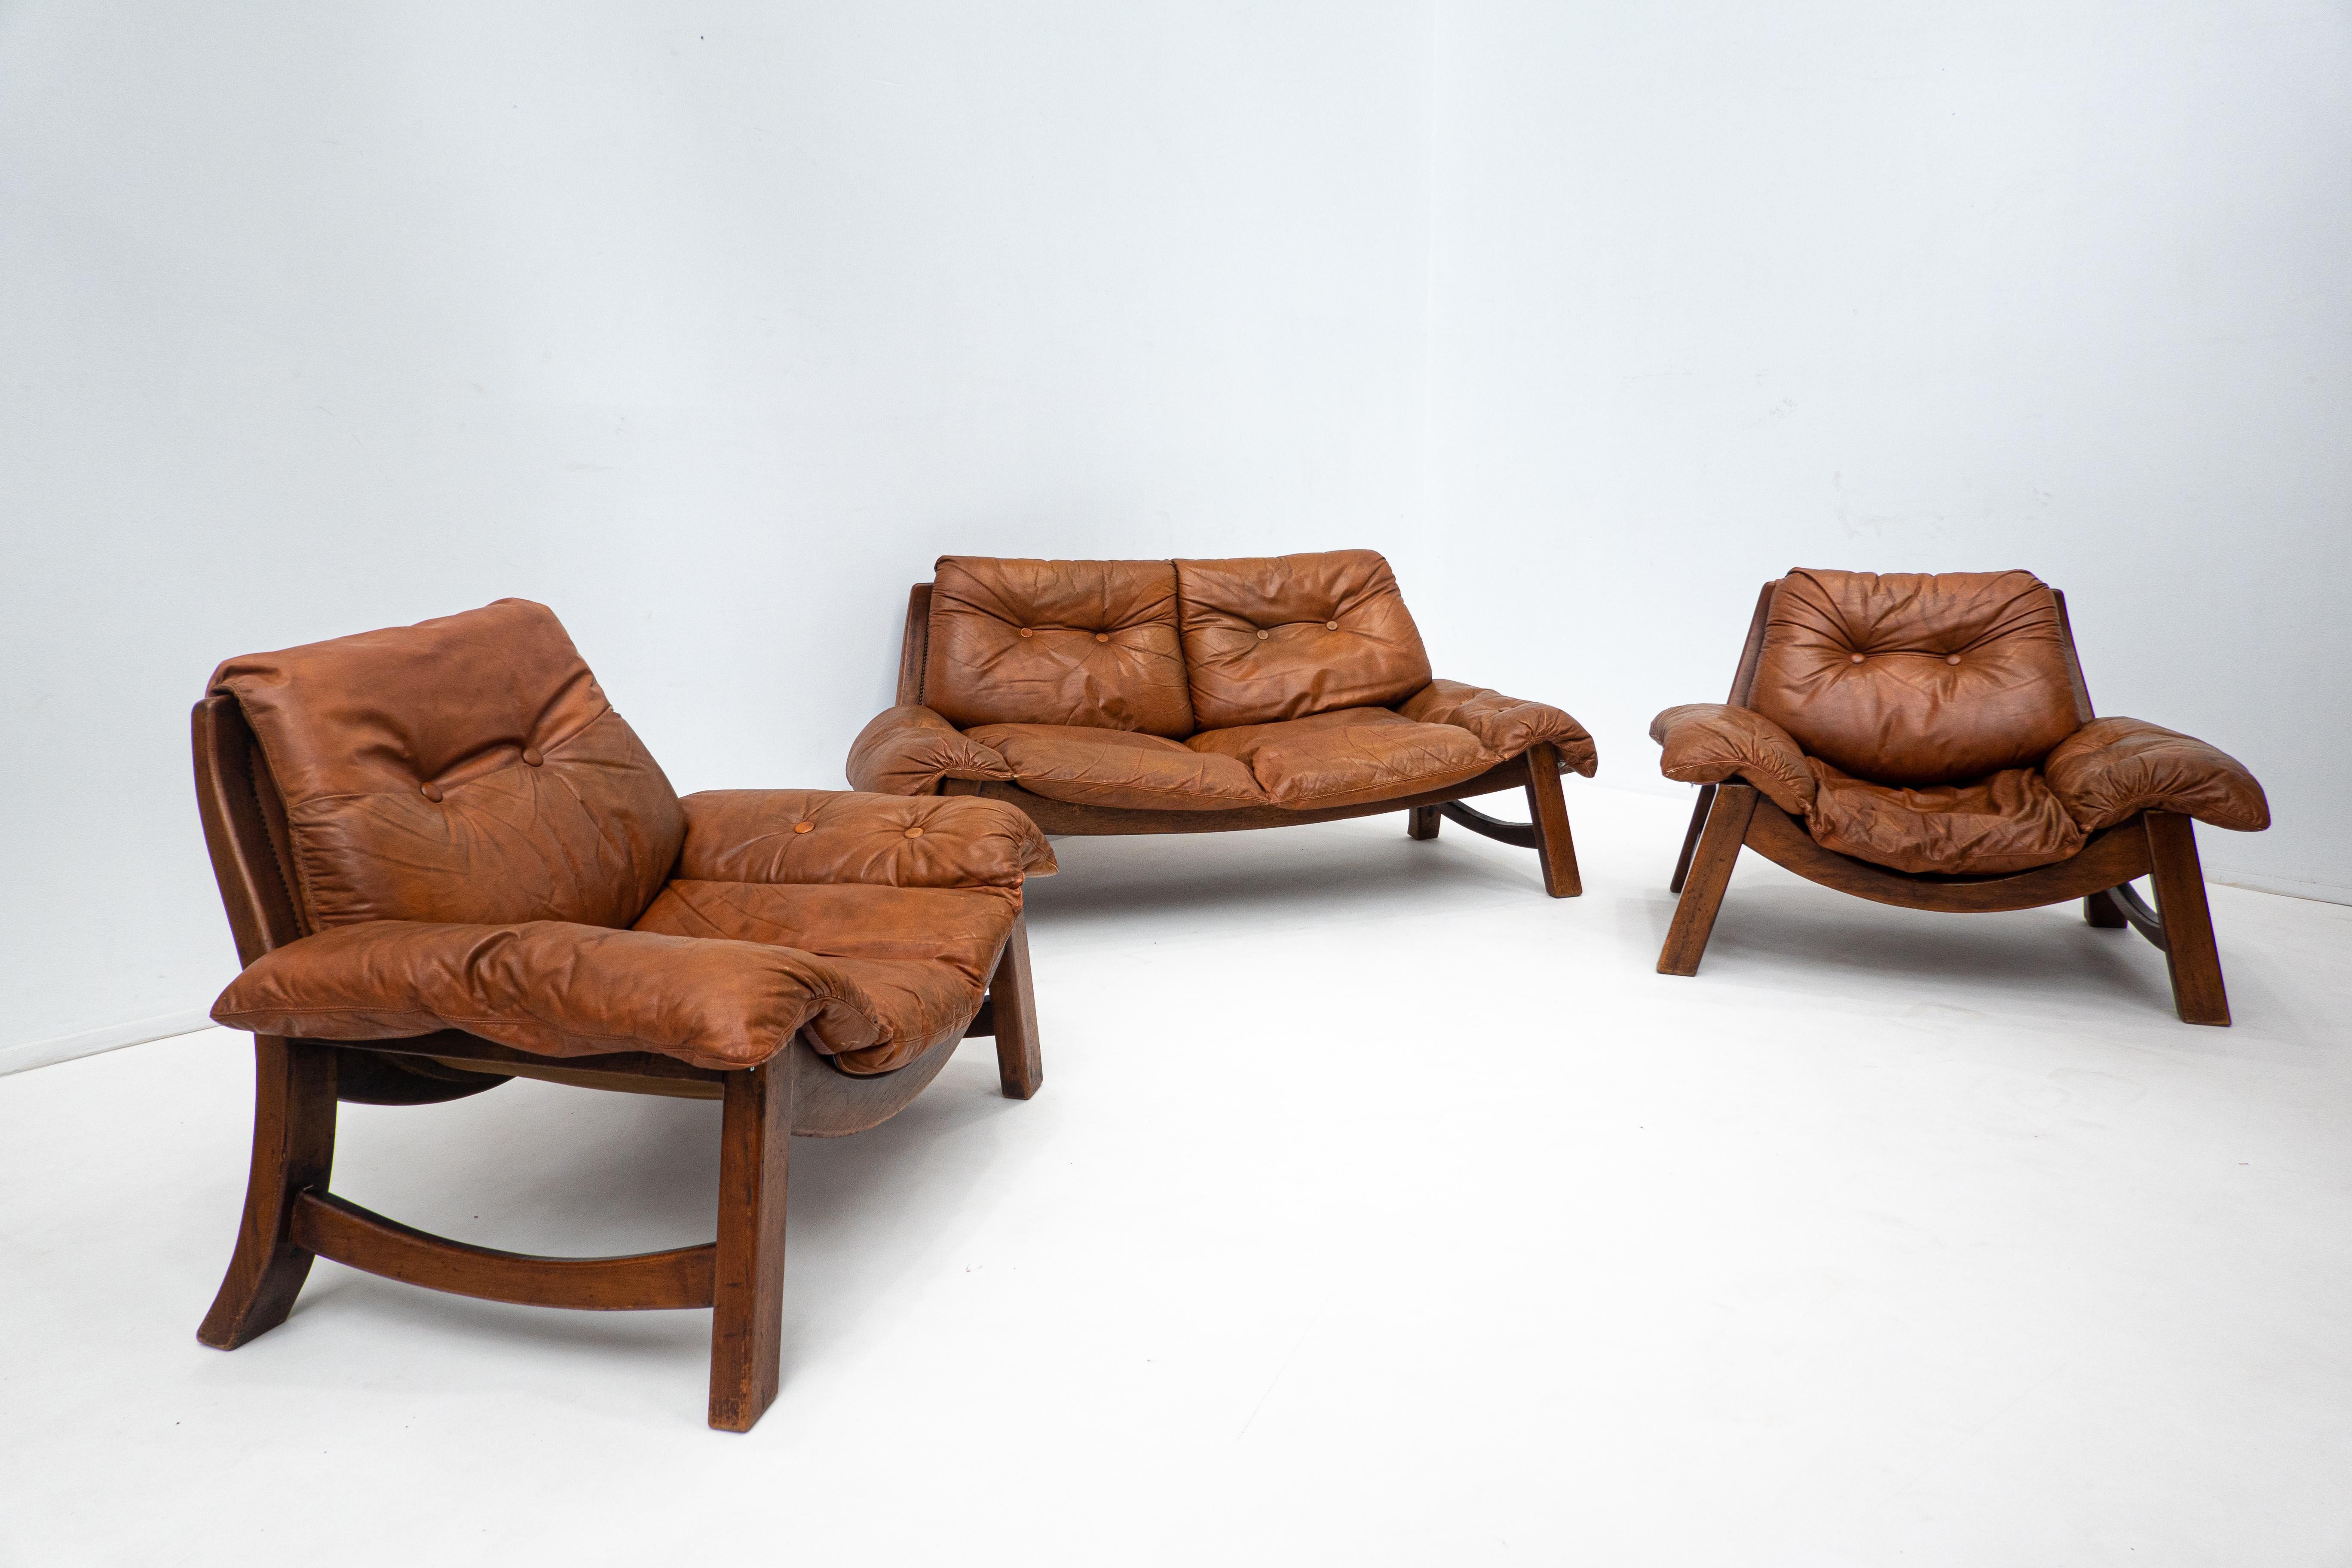 Mid-Century Modern living room set, original cognac leather, Brazilian Style, 1960s
Dimensions : 

Sofa : 170x75x80 cm 

Armchair : 103 x 75 x 80cm